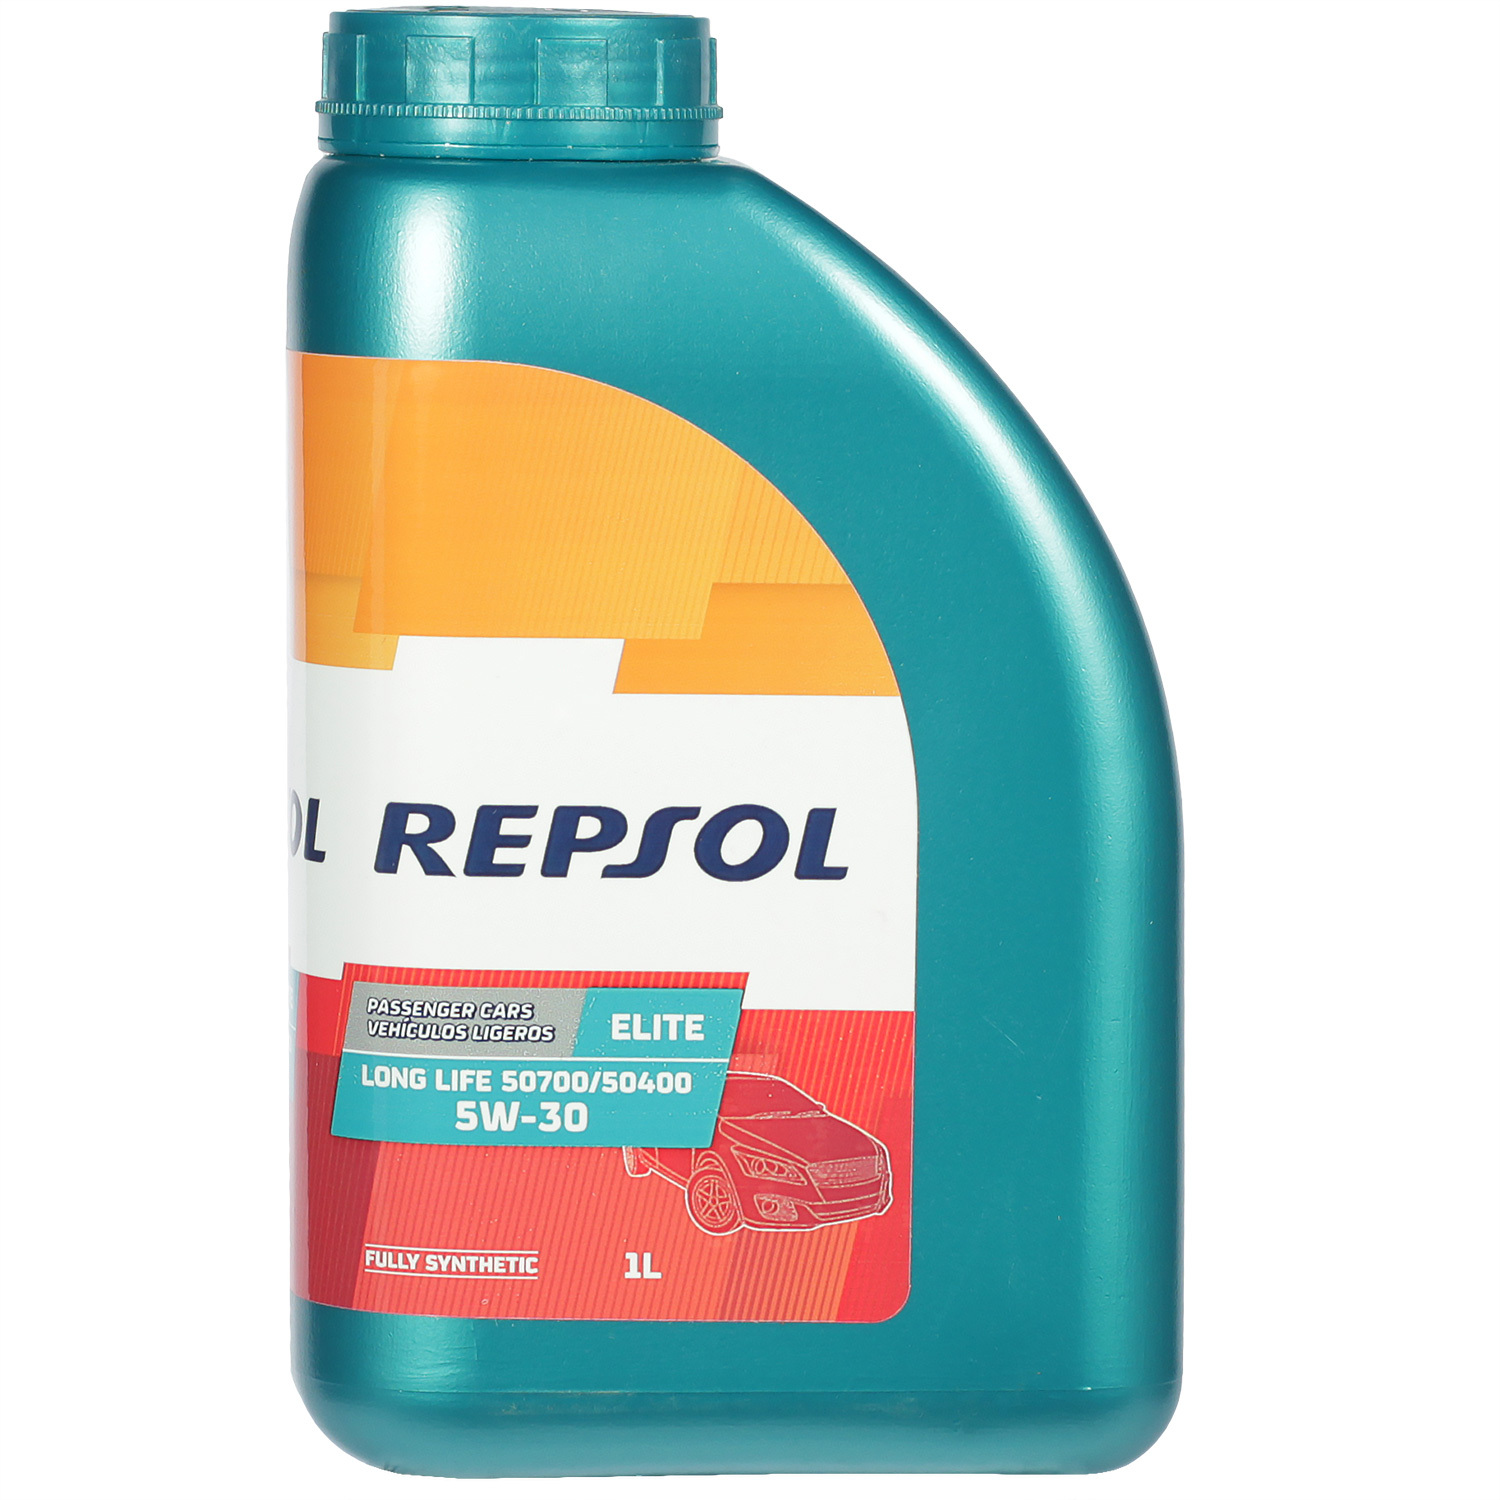 Repsol Моторное масло Repsol Elite LONG LIFE 50700/50400 5W-30, 1 л repsol моторное масло repsol elite neo 5w 30 1 л